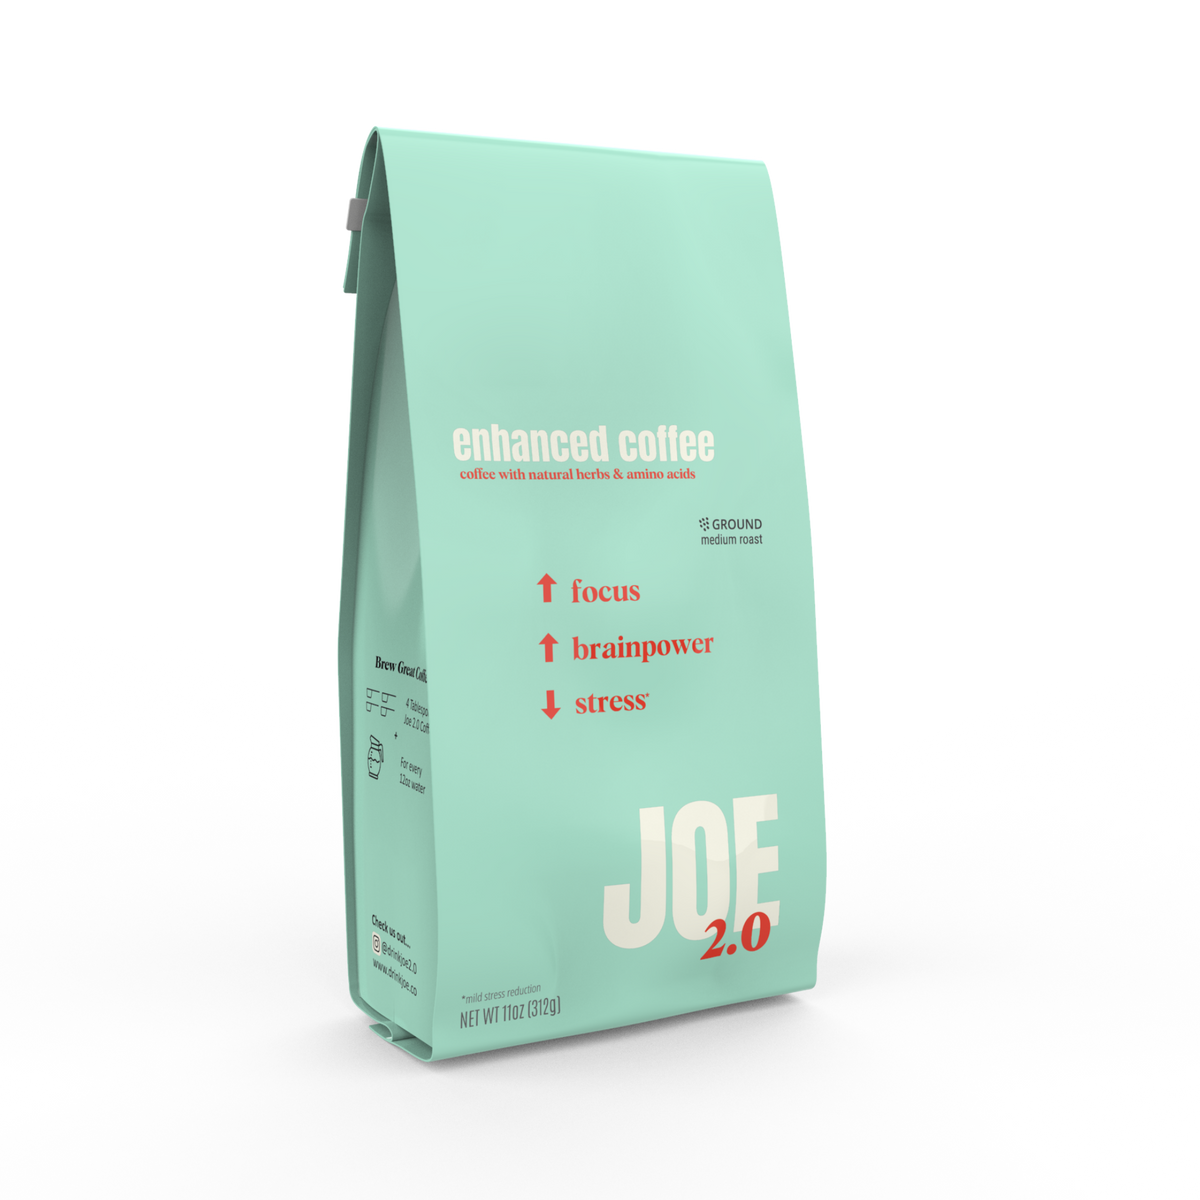 Joe 2.0 Coffee enhances focus, boosts brainpower, and reduces stress